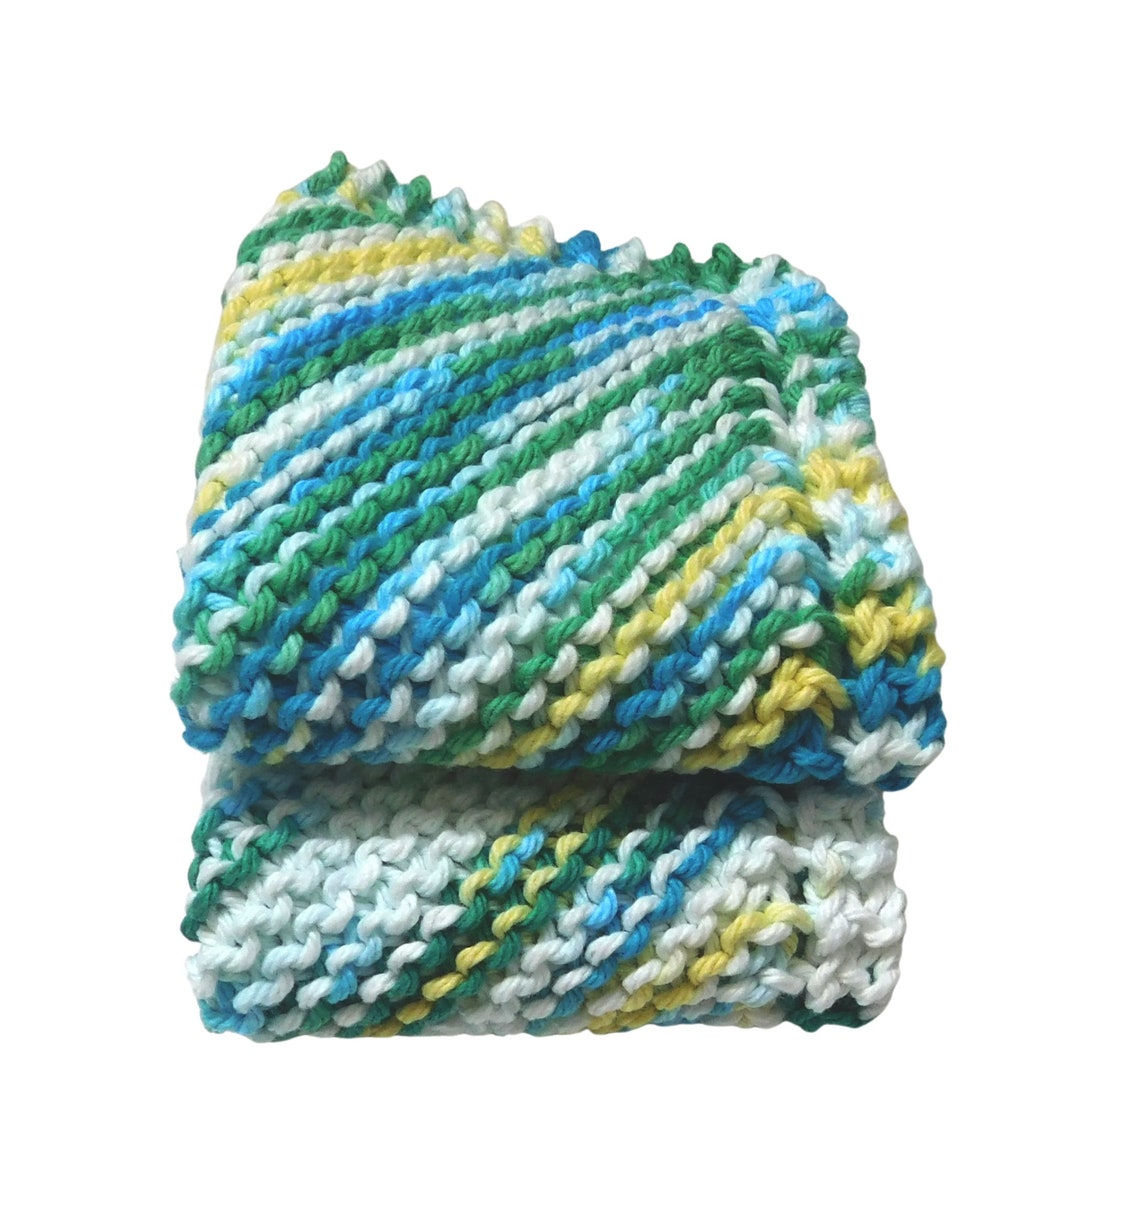 Knitted Dishcloth Washcloth Washrag Dishrag Cotton Set in | Etsy